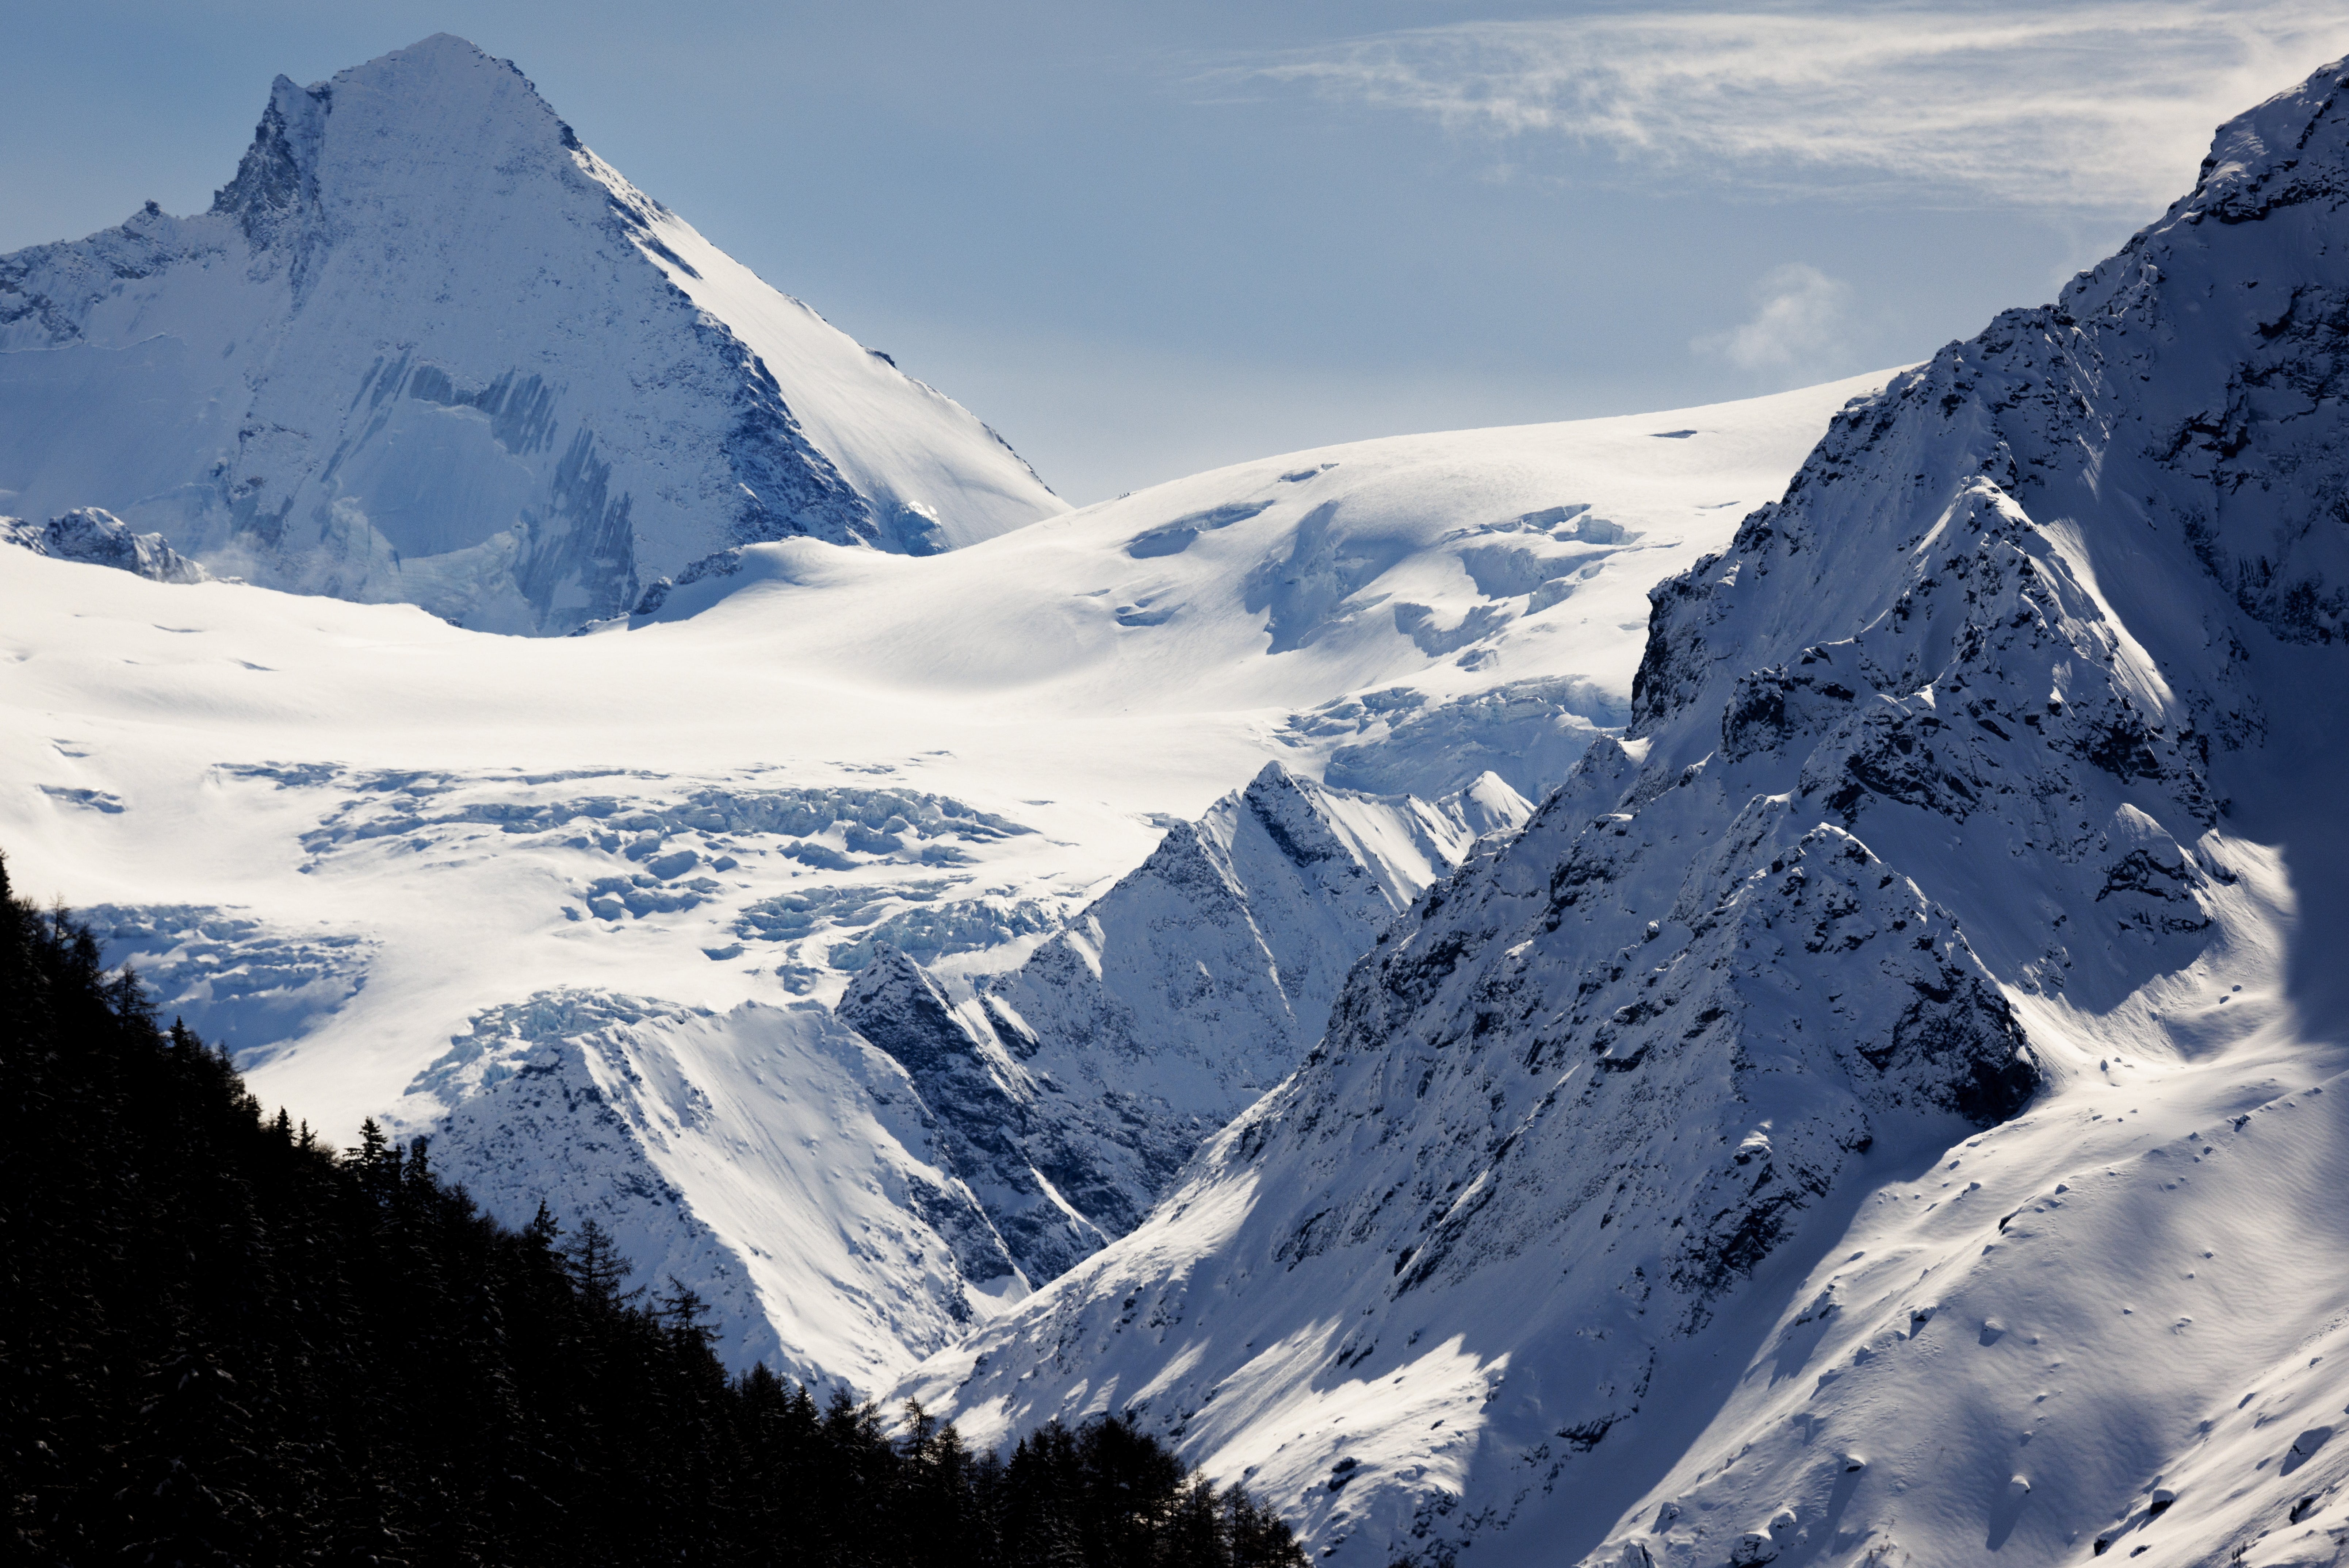 The Tete Blanche mountain snow field where five bodies were found